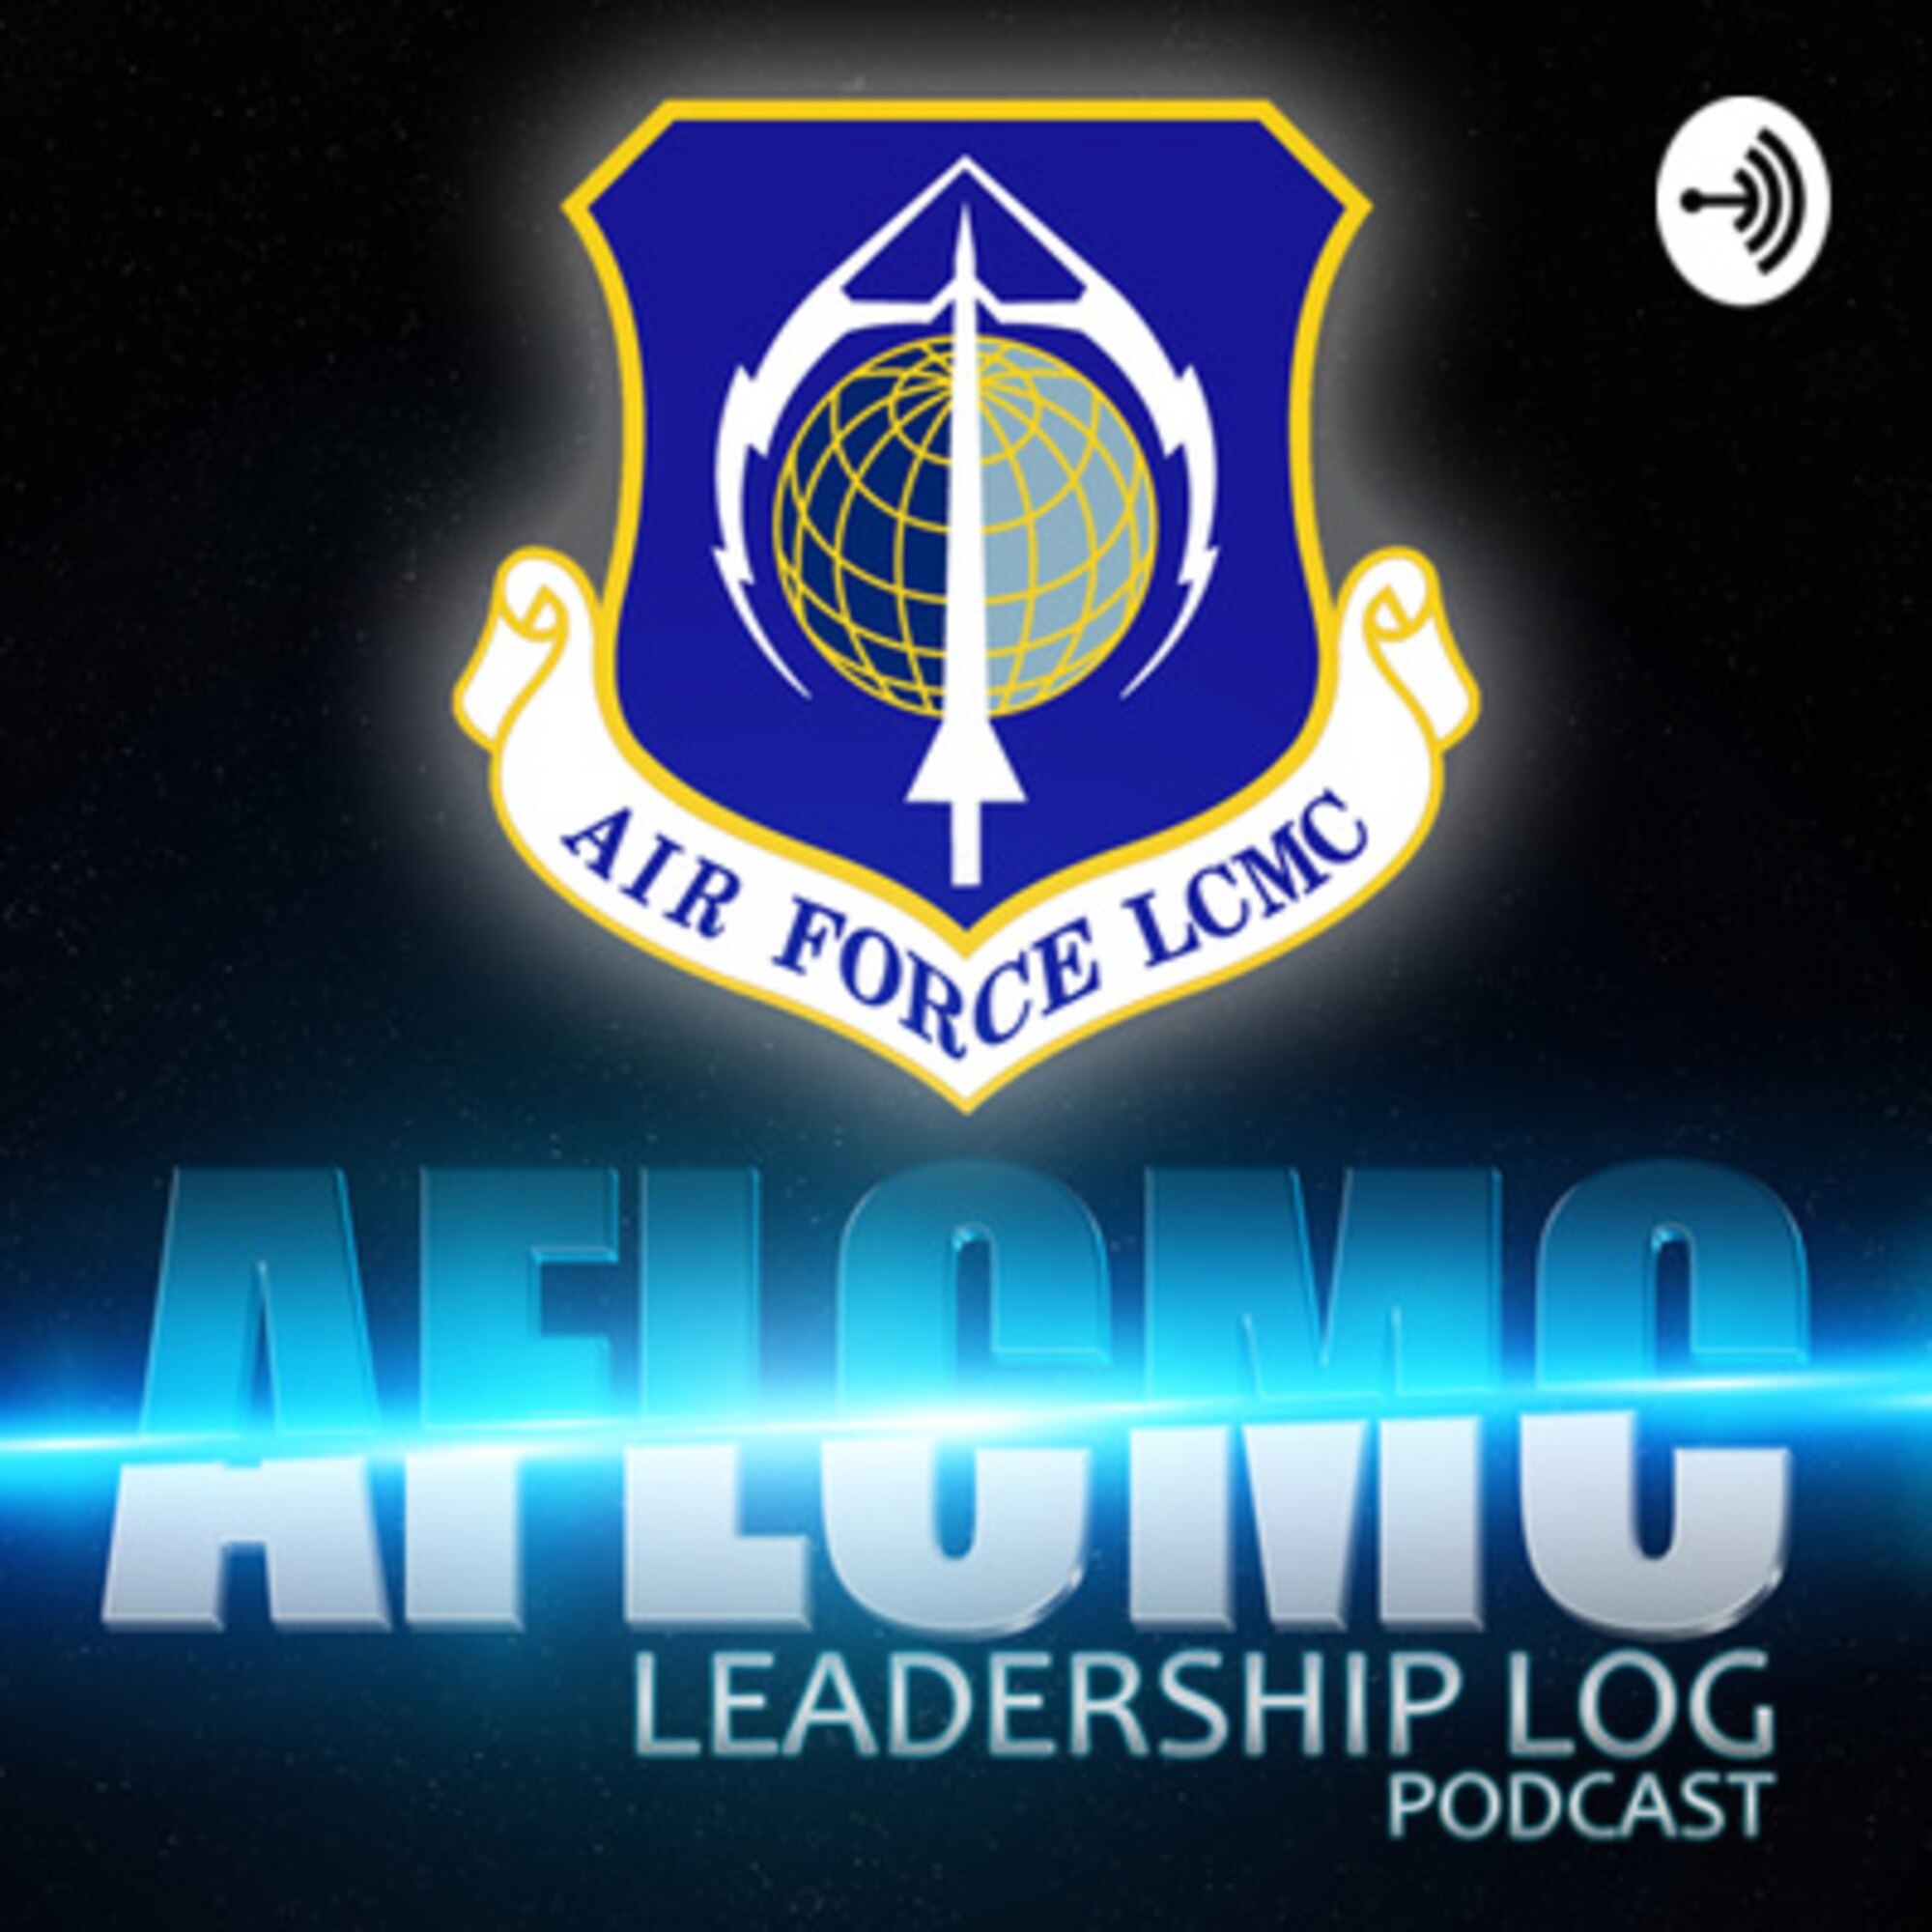 Leadership Log podcast